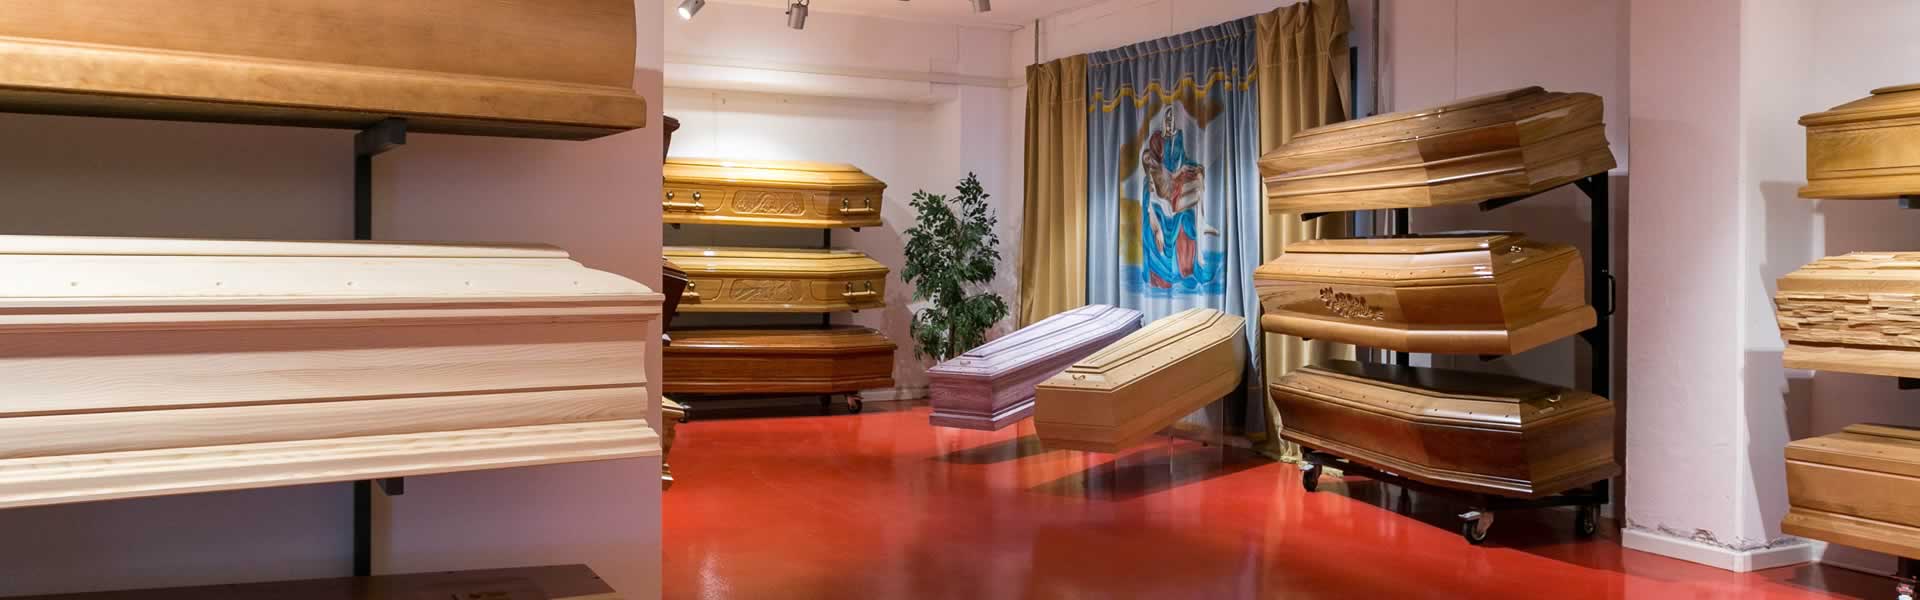 Cofani funebri per celebrazione funerali